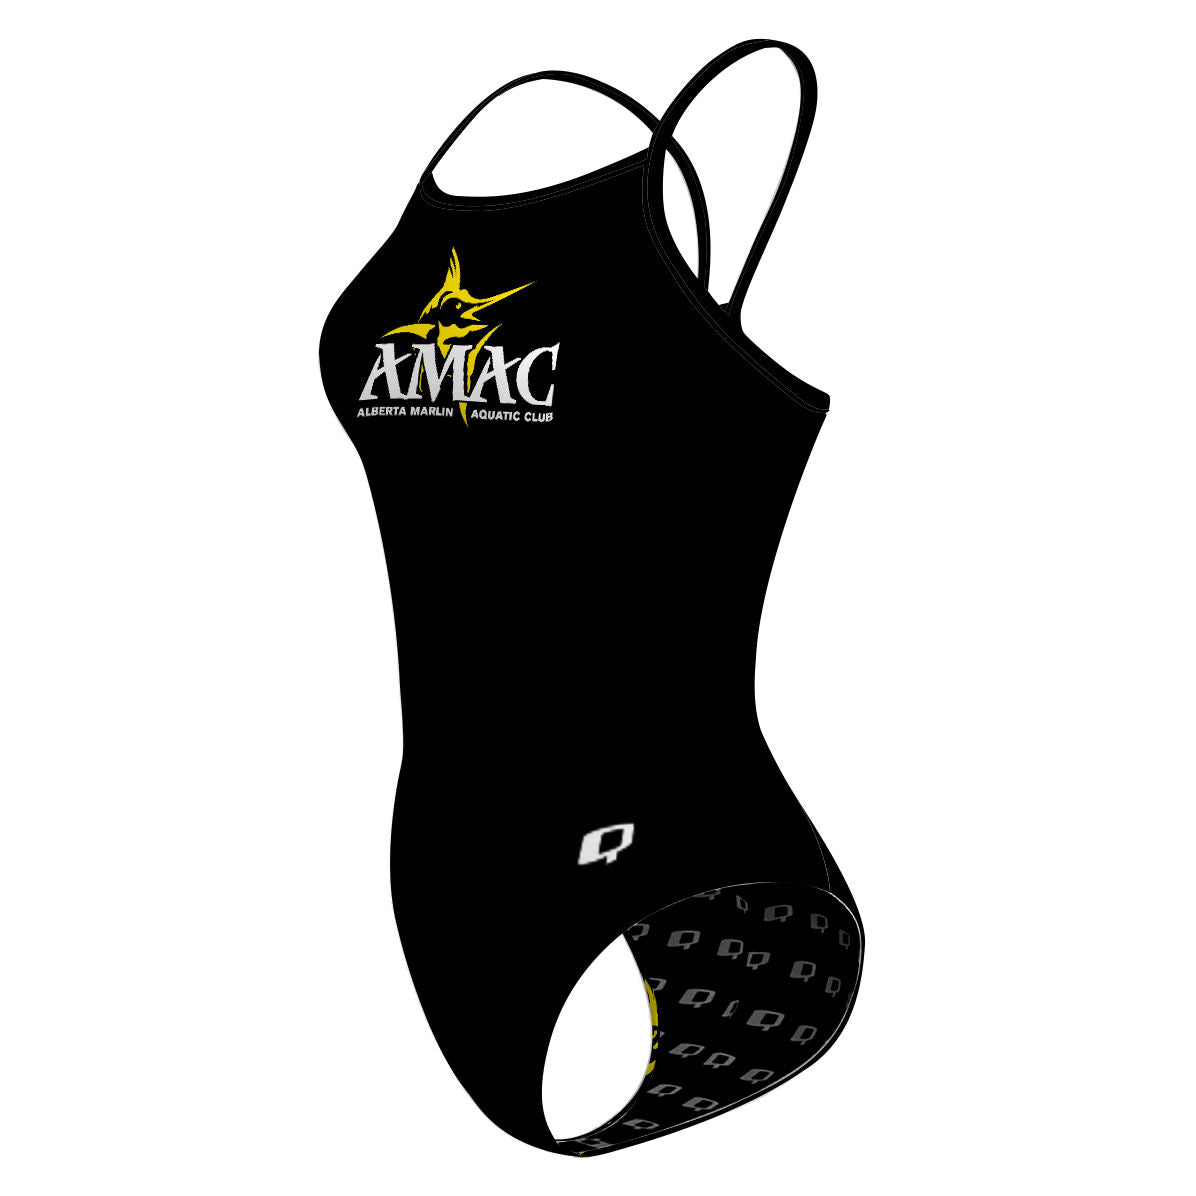 AMAC 22 FV - Skinny Strap Swimsuit